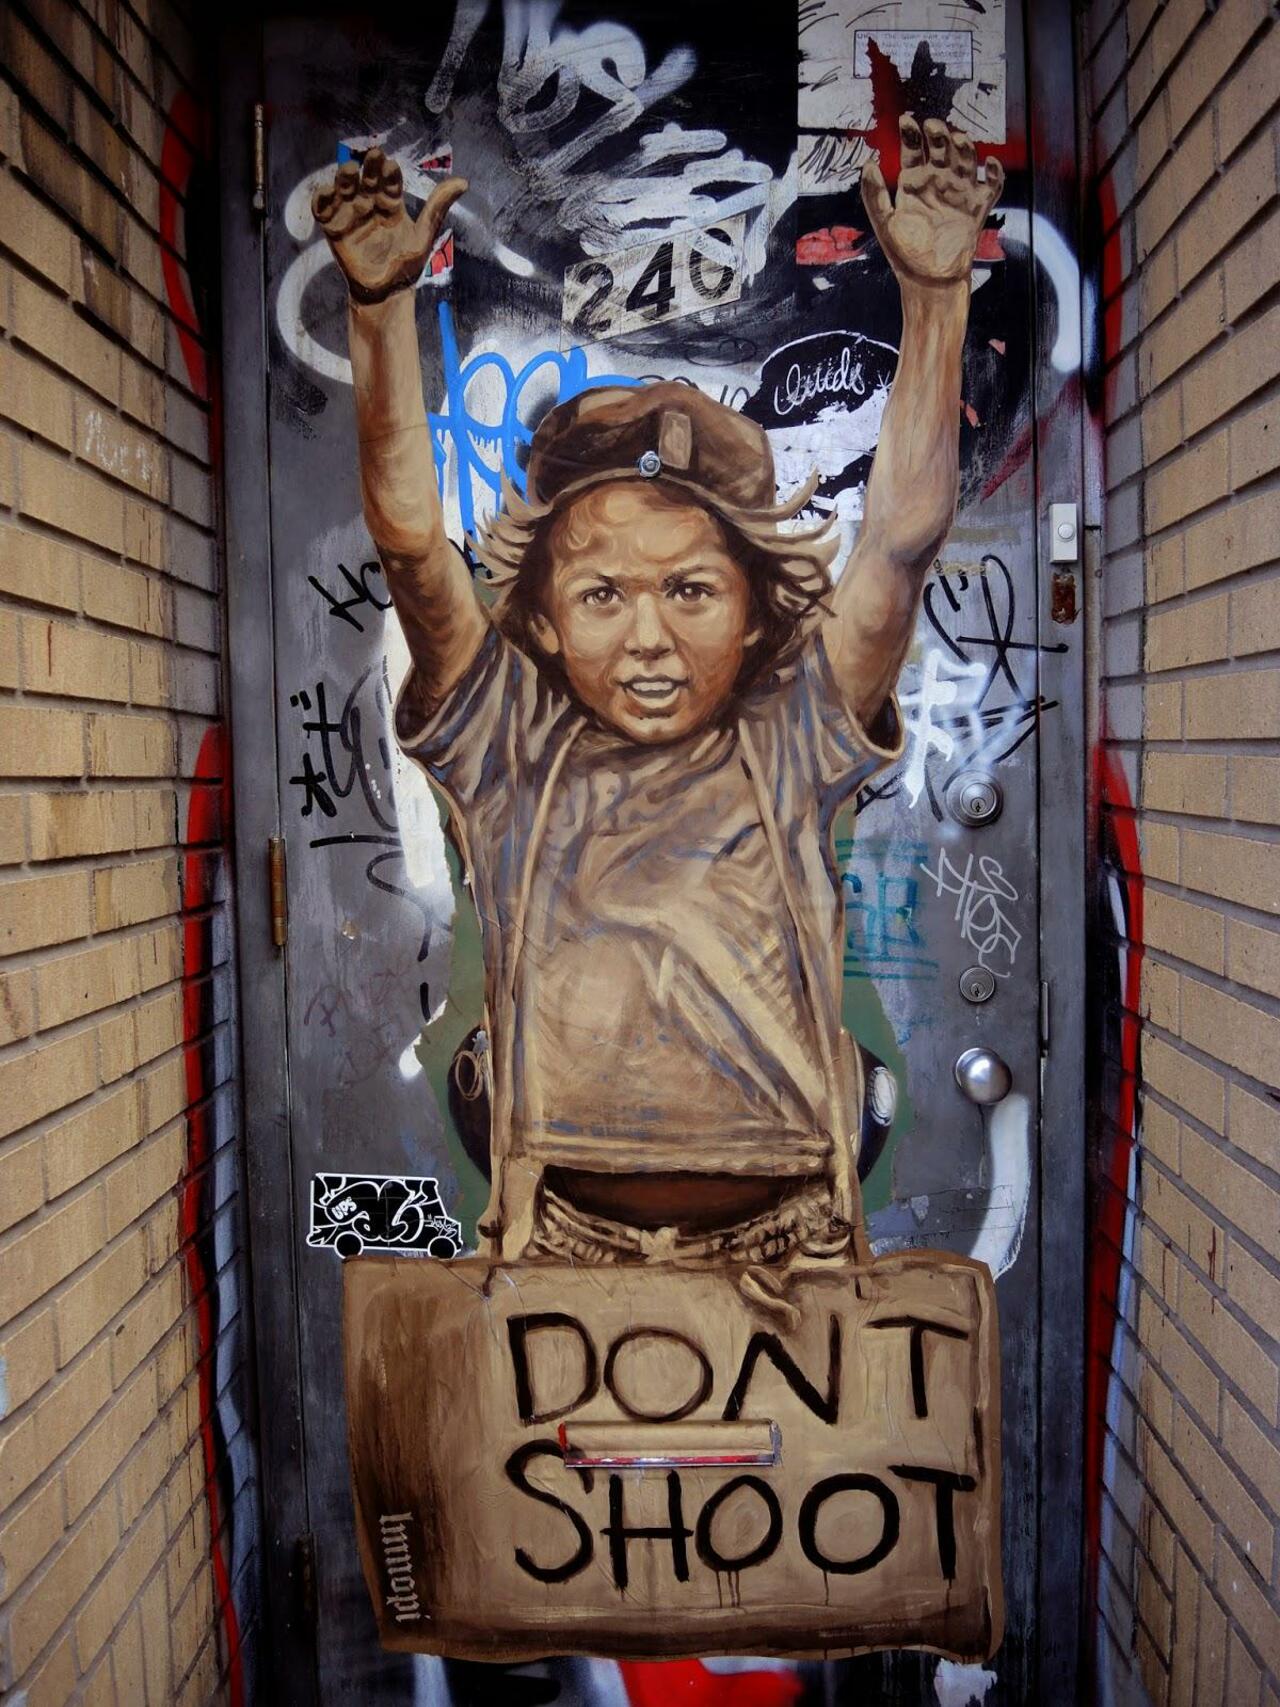 RT @Brindille_: #Streetart #urbanart #graffiti #painting "Hands Up" by Lmnopi (Brooklyn Solidarity with Ferguson) http://t.co/HbvWSV9lmY